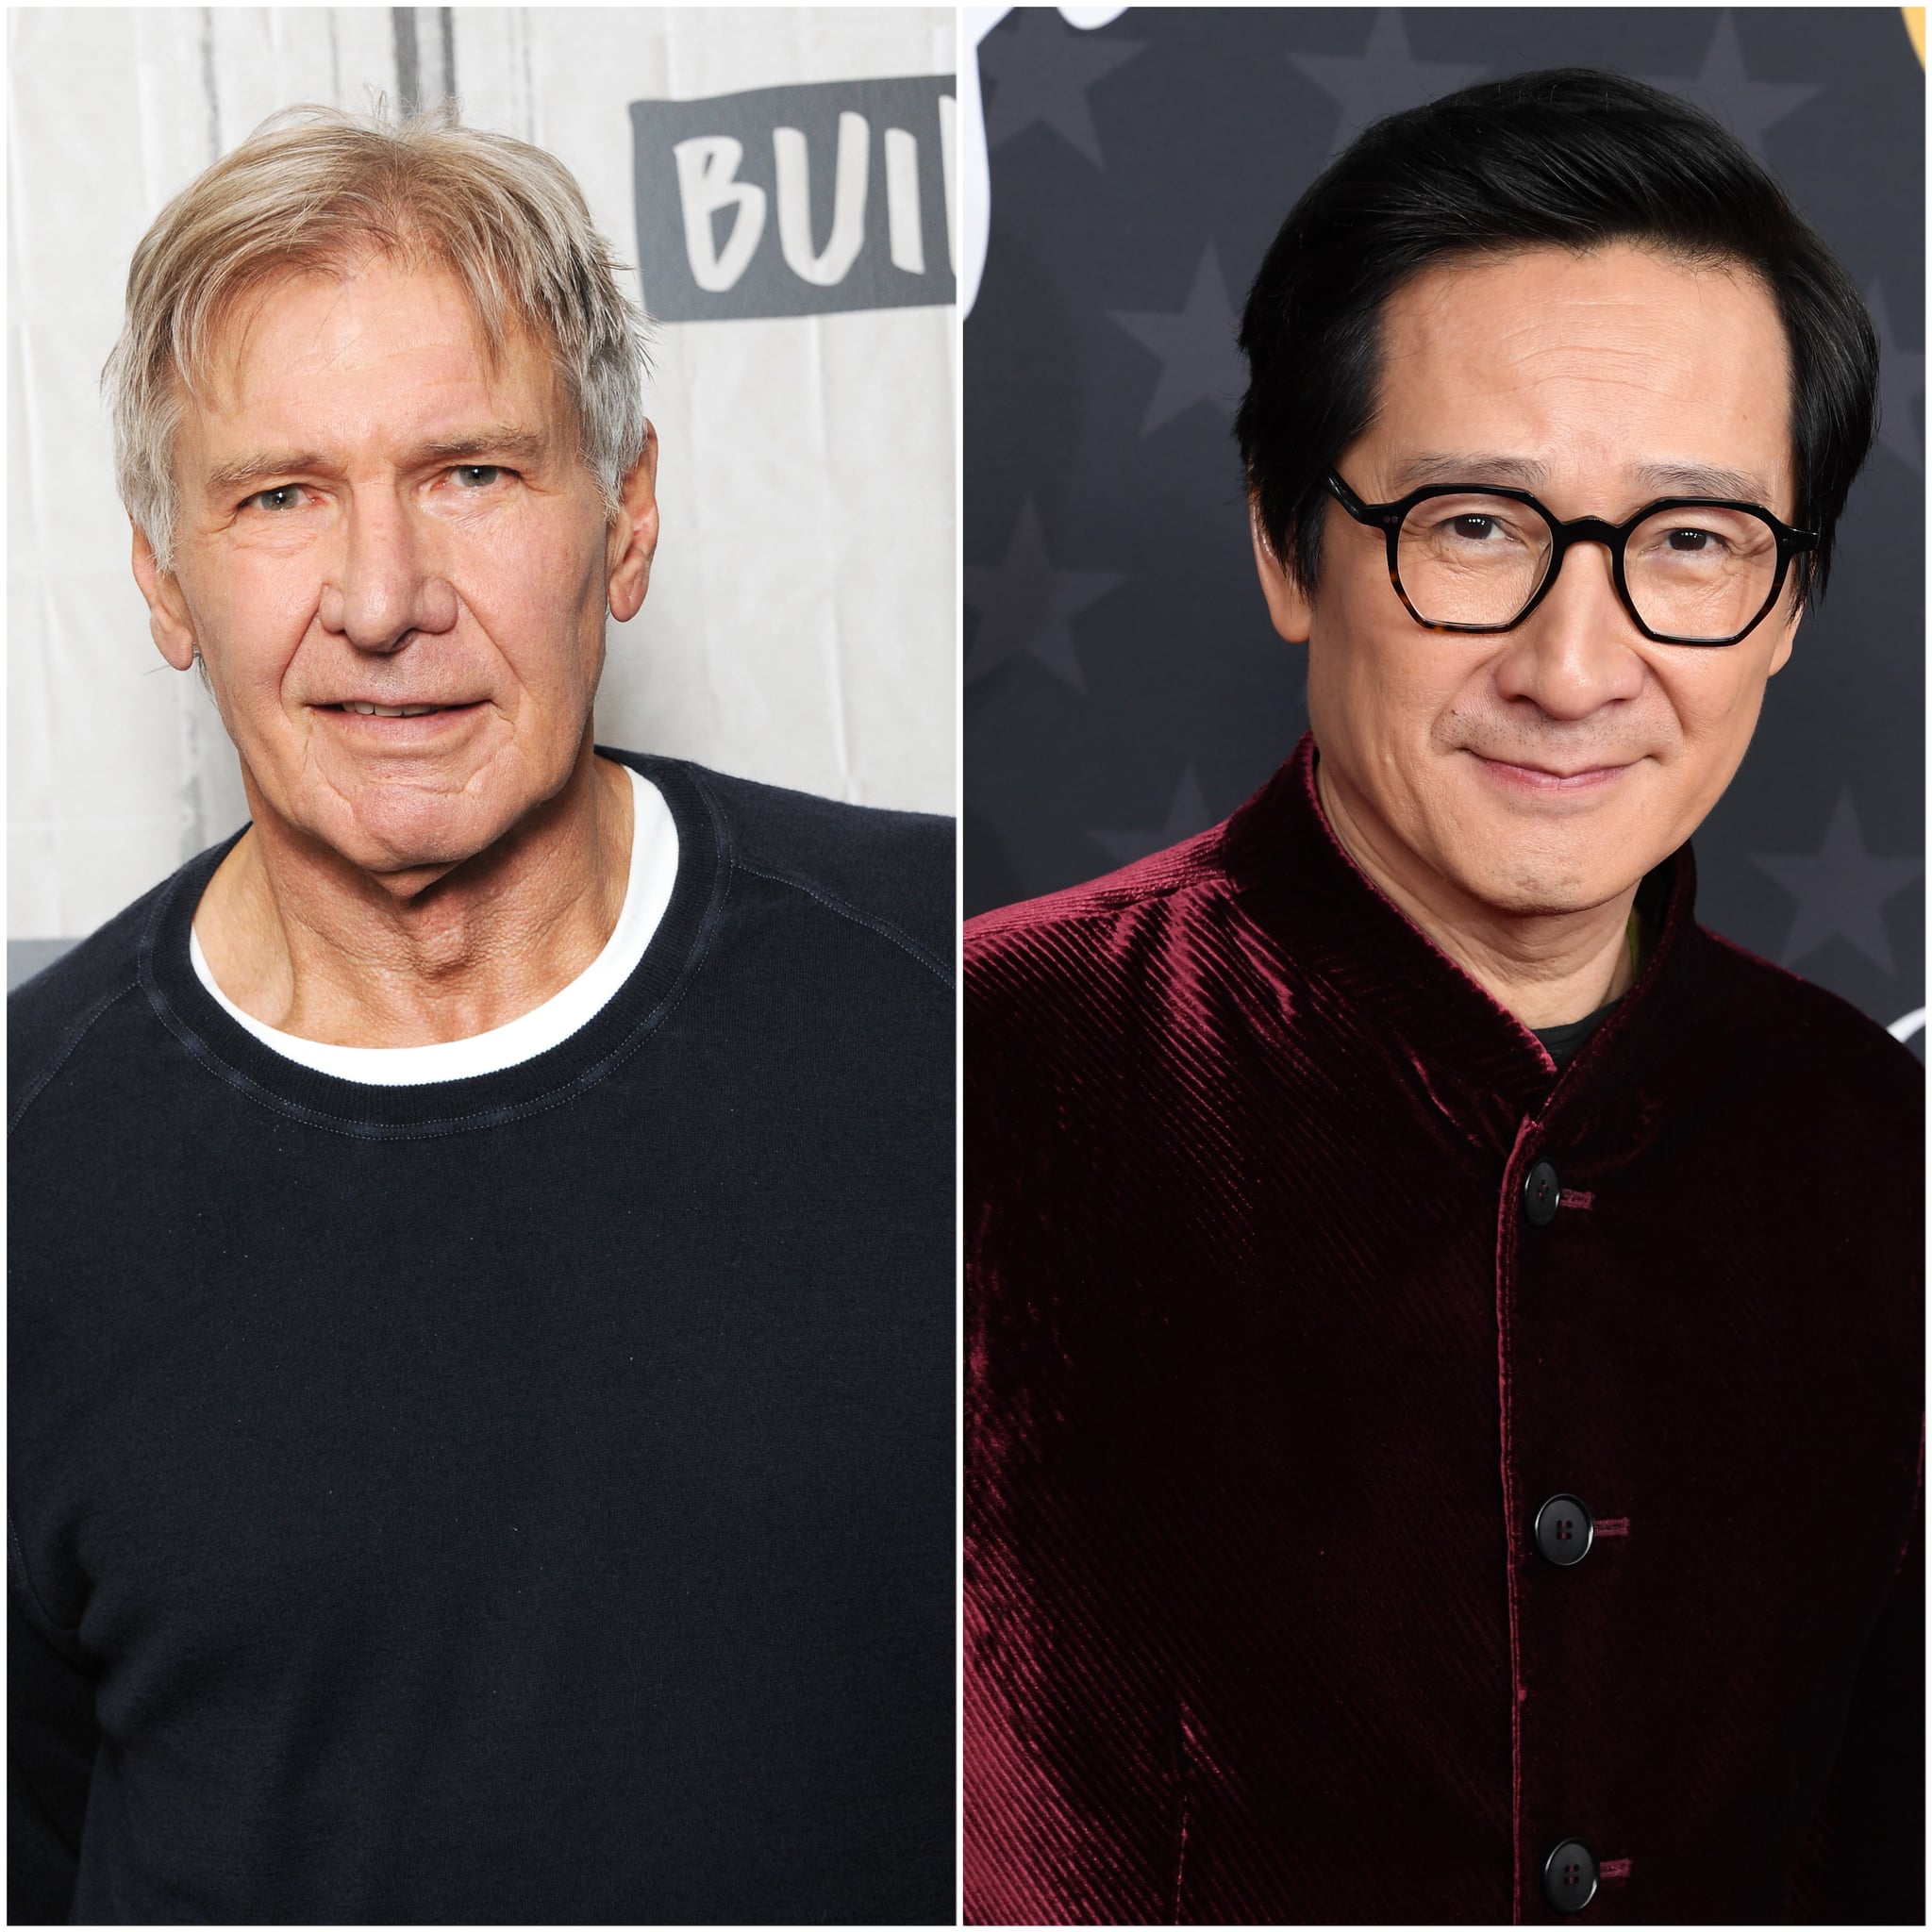 Harrison Ford Congratulates Ke Huy Quan on His Oscar Nomination: “I am So Glad for Him”